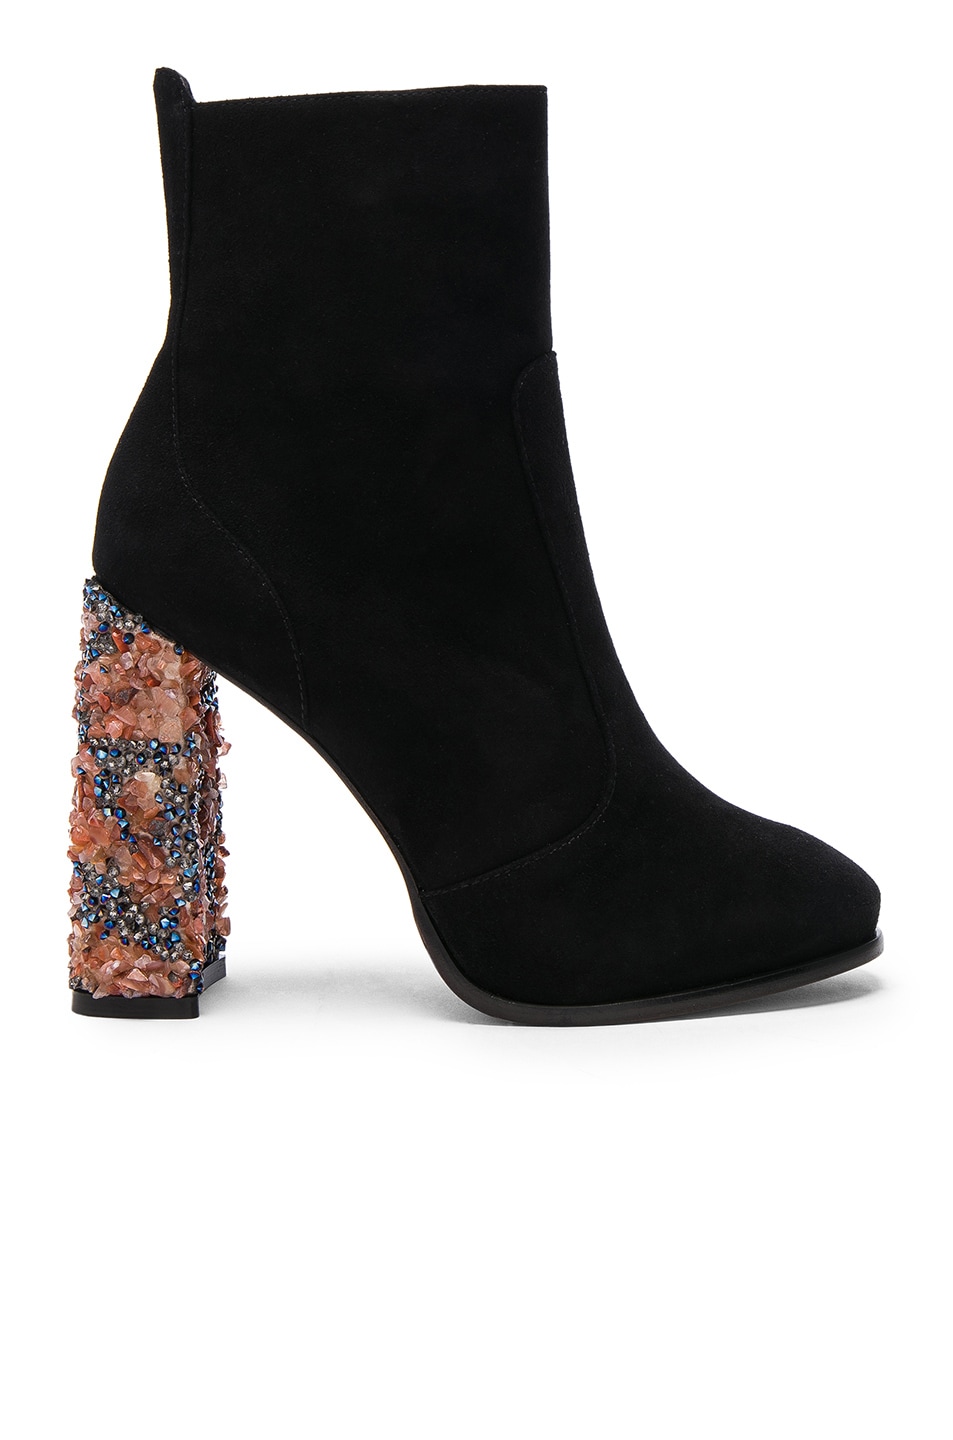 Image 1 of Sophia Webster Kendra Suede Ankle Boots in Black & Amber Crystal